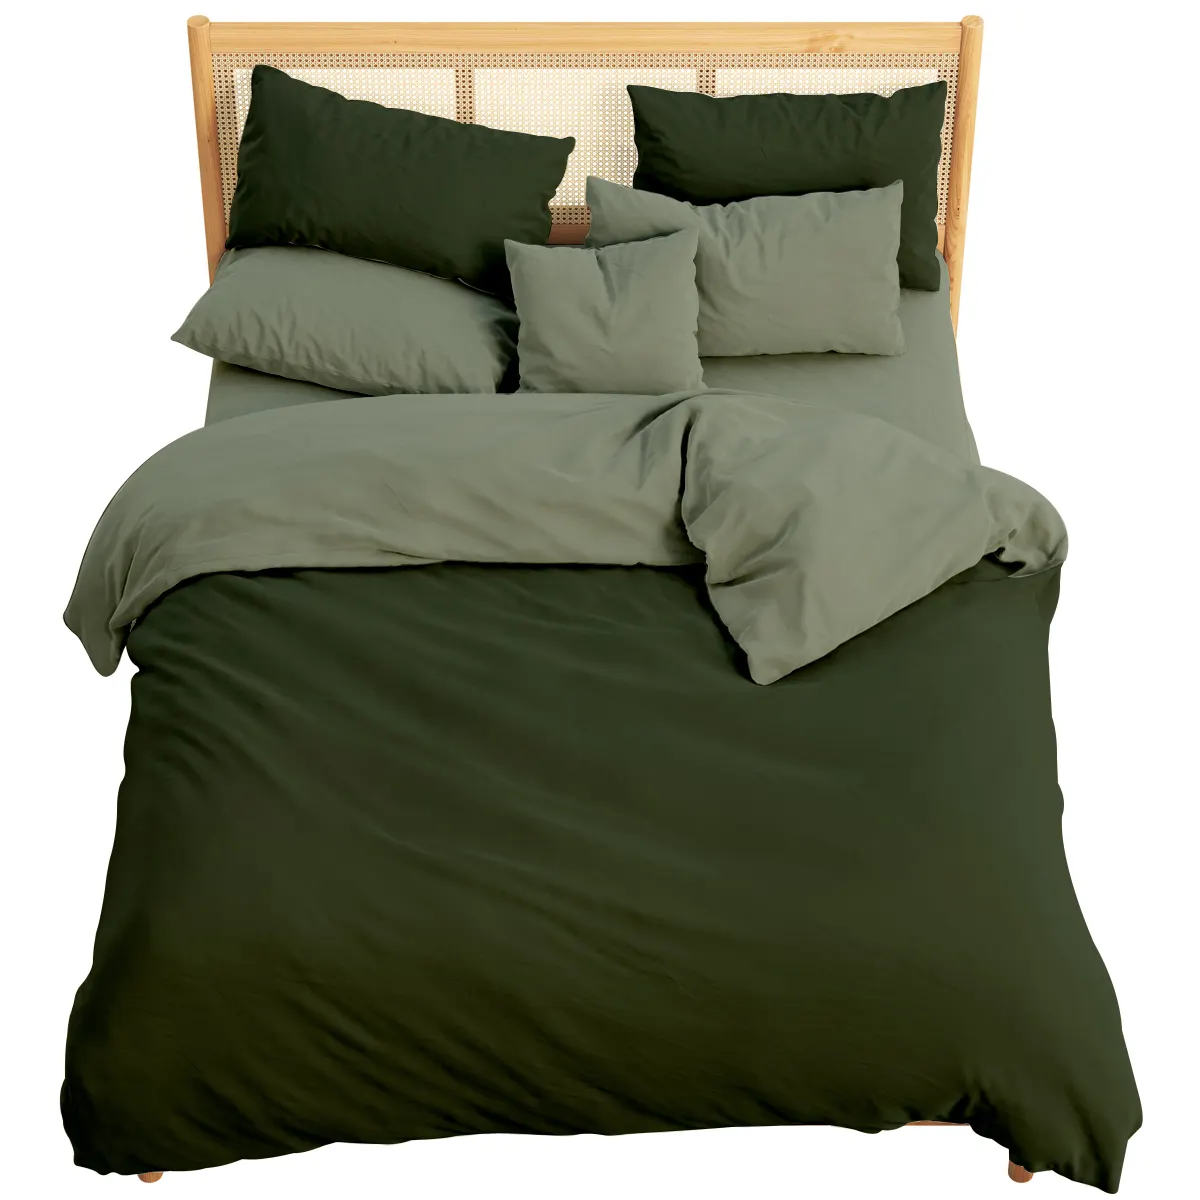 Famous Home 100%Cotton Solid 4pcs Duvet Cover Sheet Quilt Cover Hotel Queen Bed Sheets Set With 2pcs Pillow Case